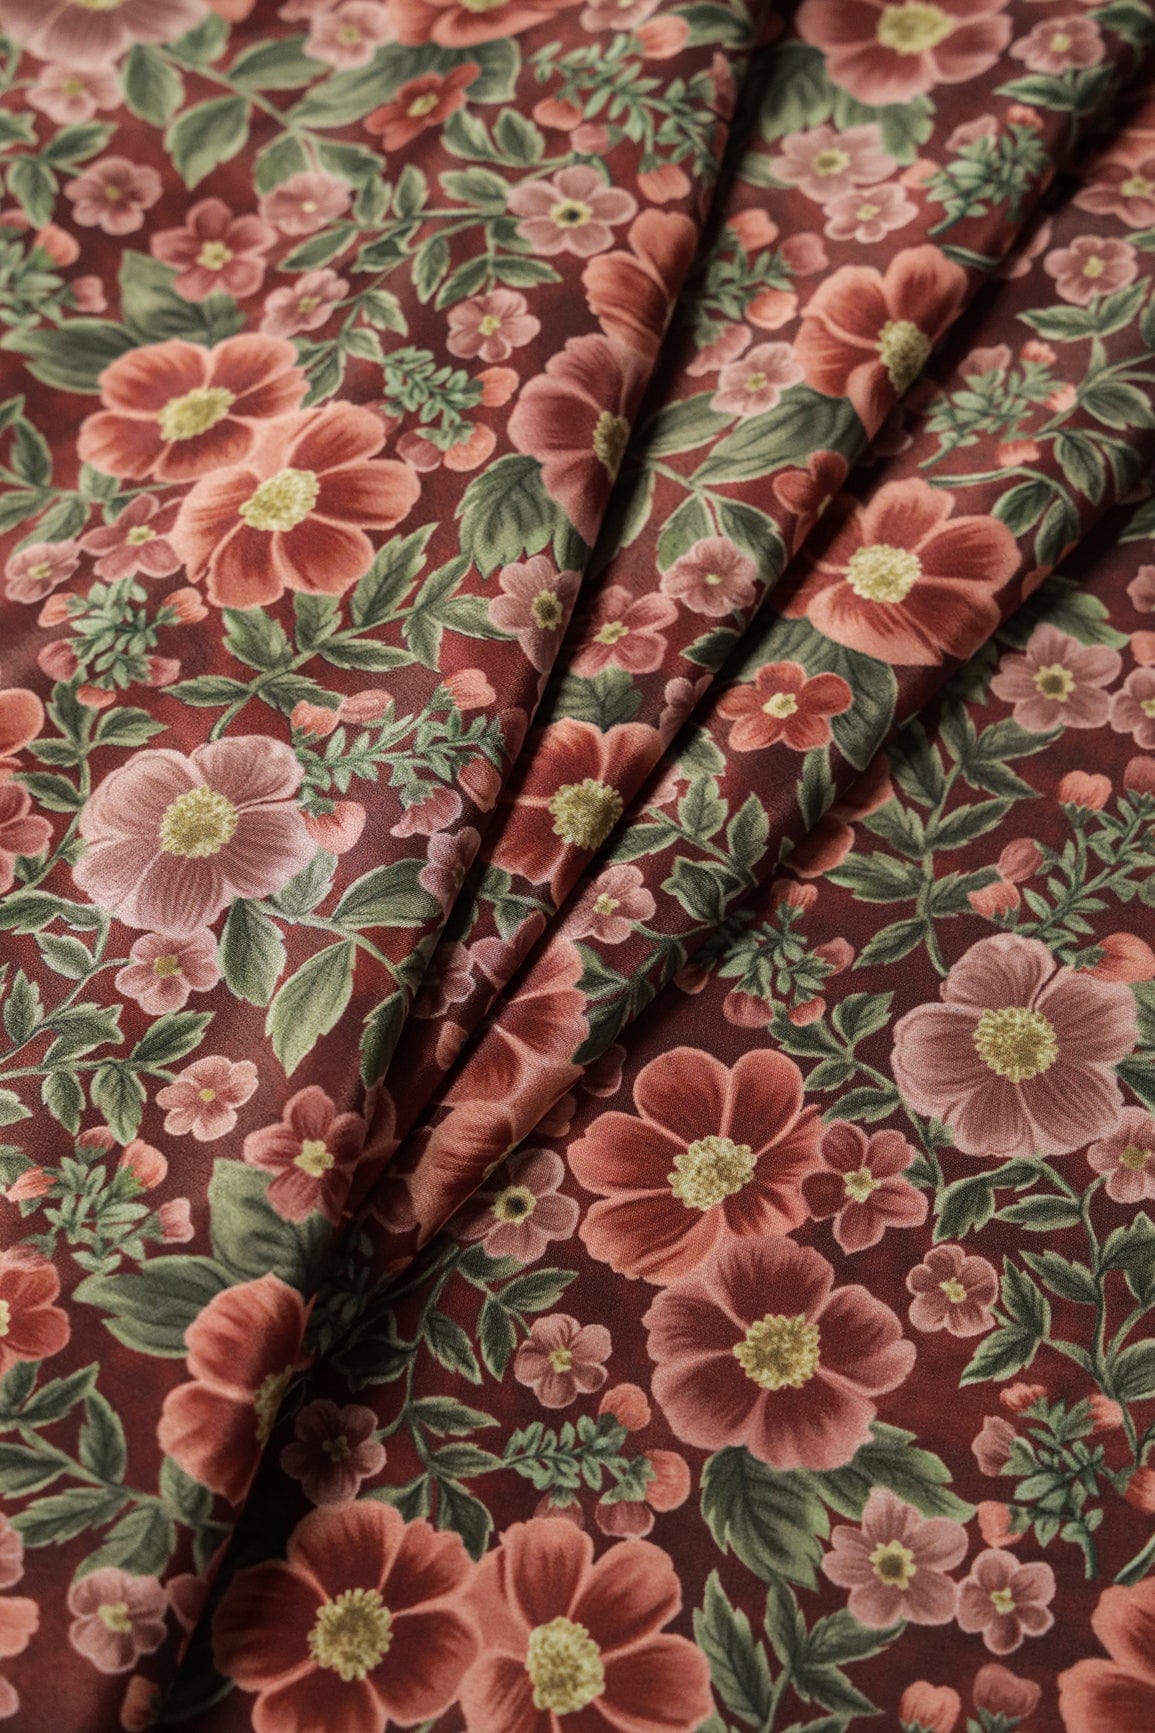 doeraa Prints Brown And Olive Floral Pattern Digital Print On Dark Brown Malai Crepe Fabric